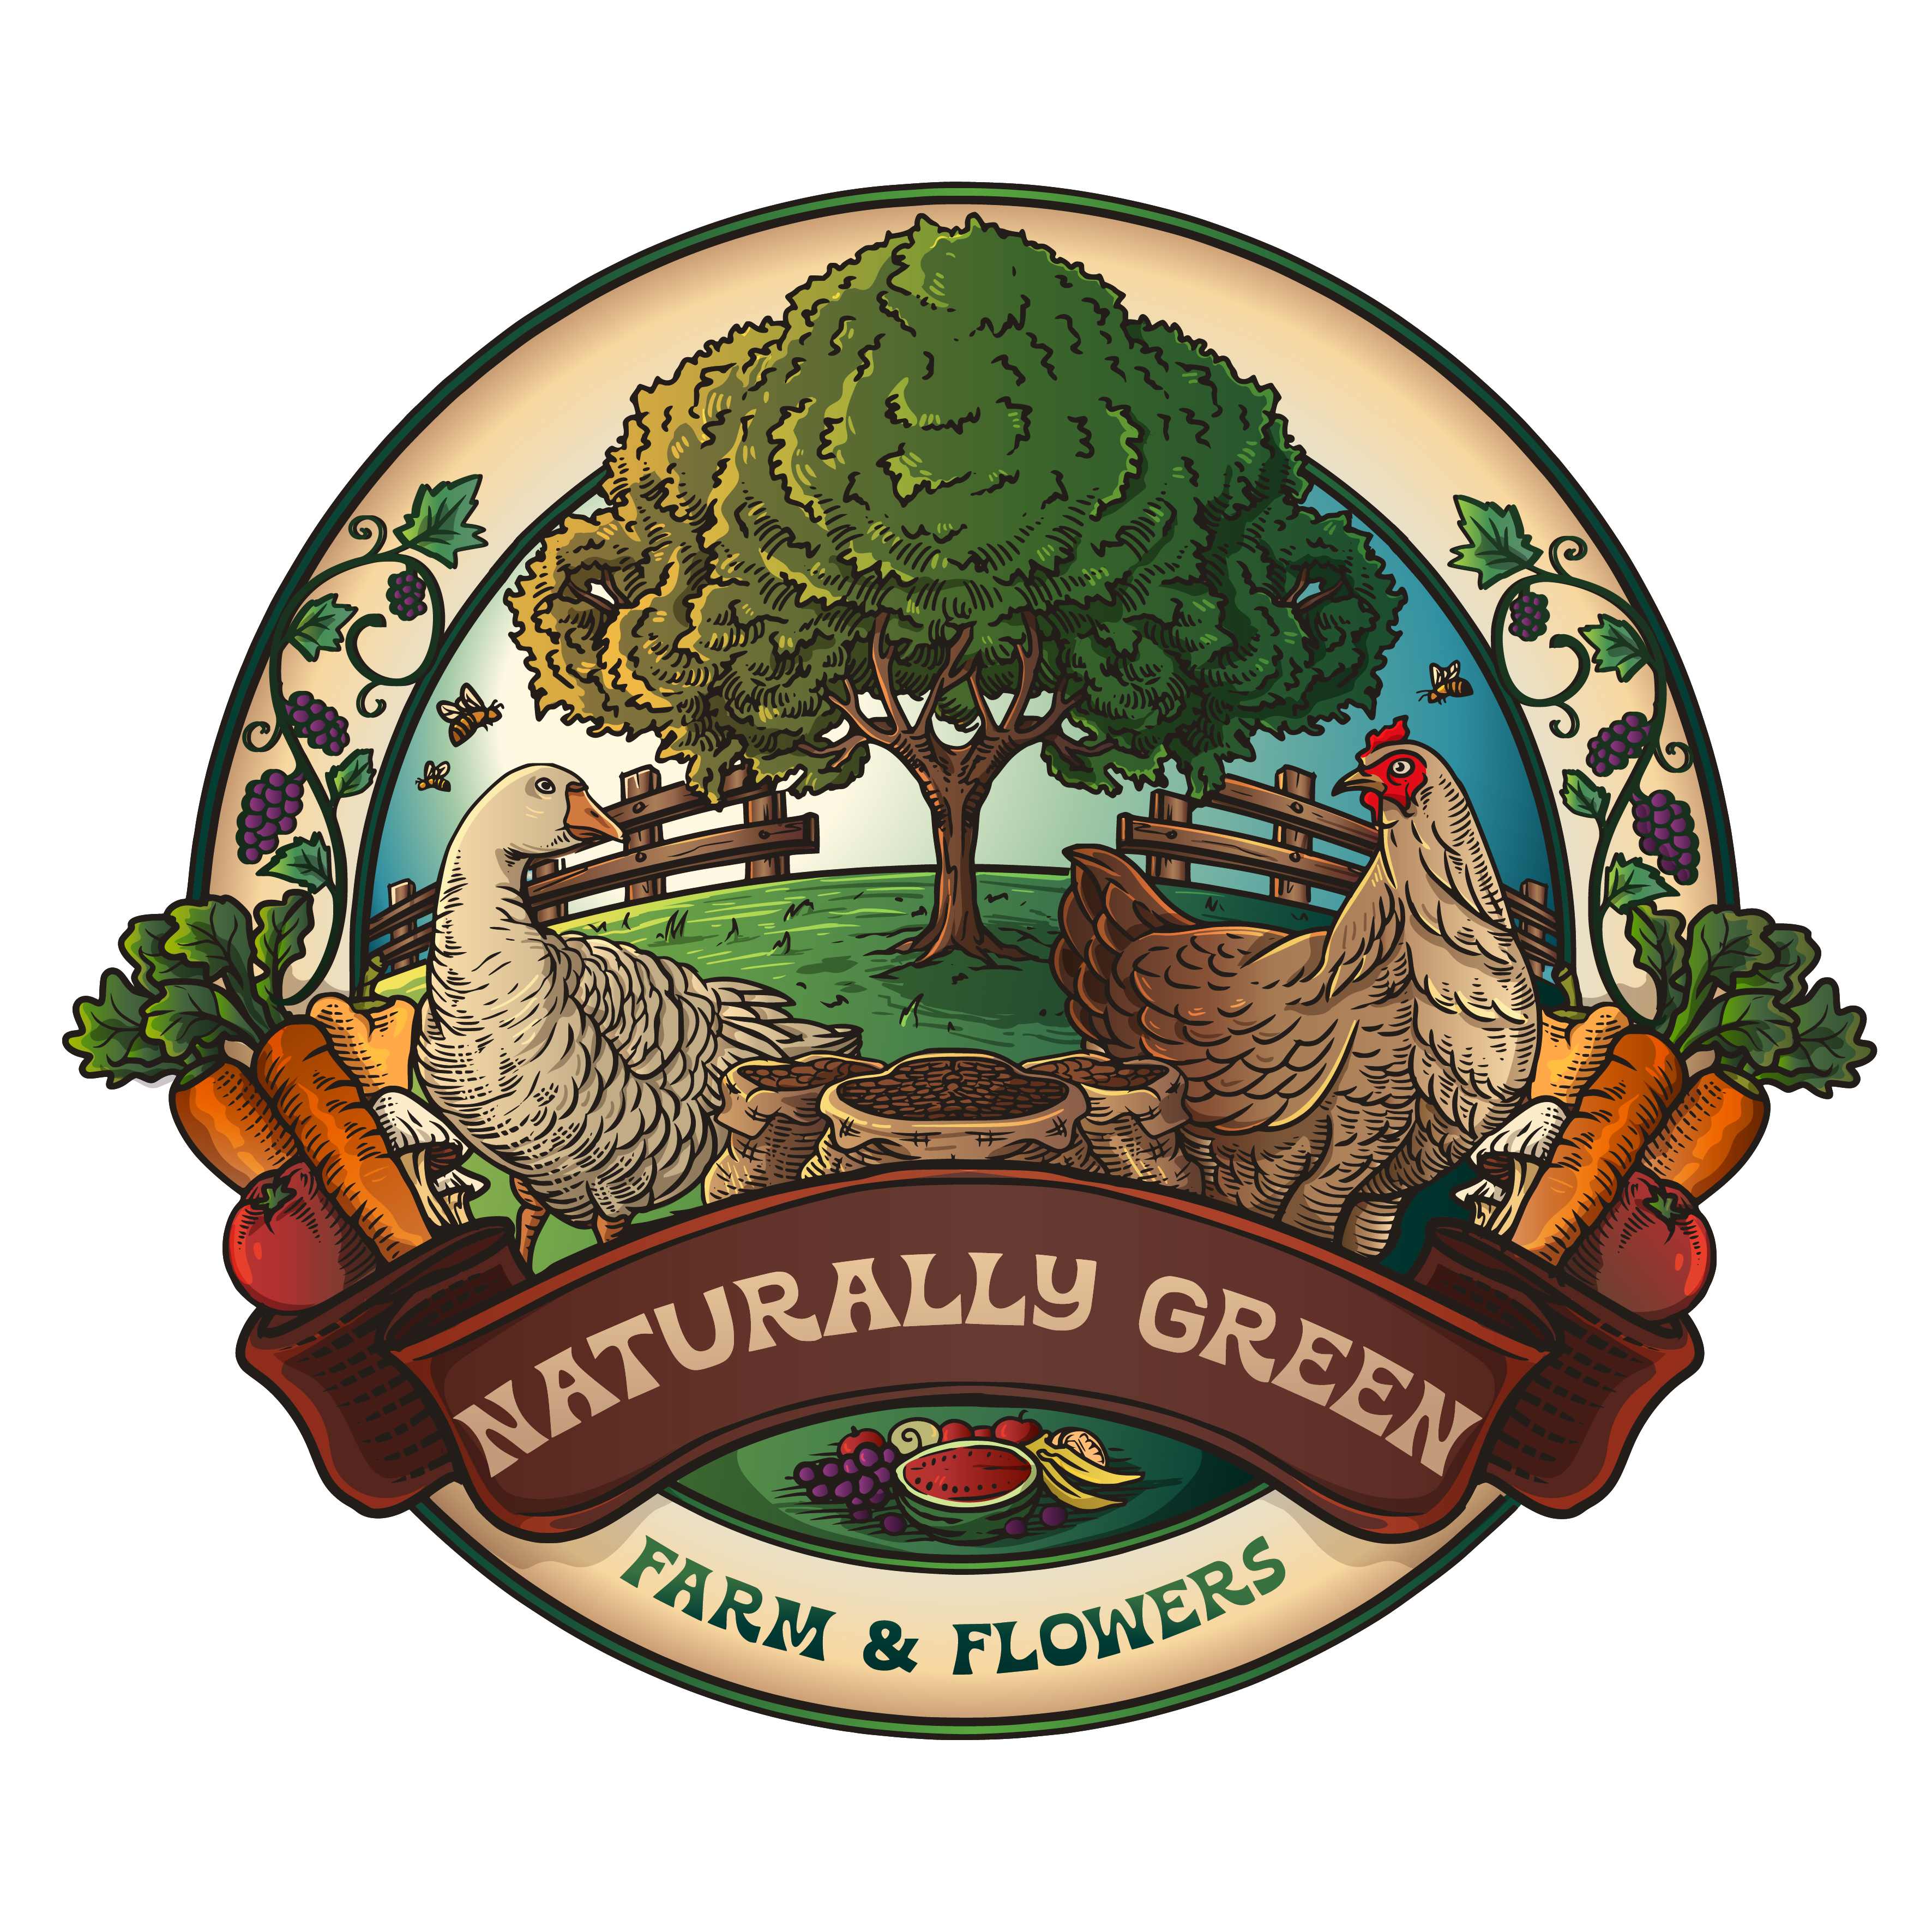 Naturally Green Farm & Flowers LLC